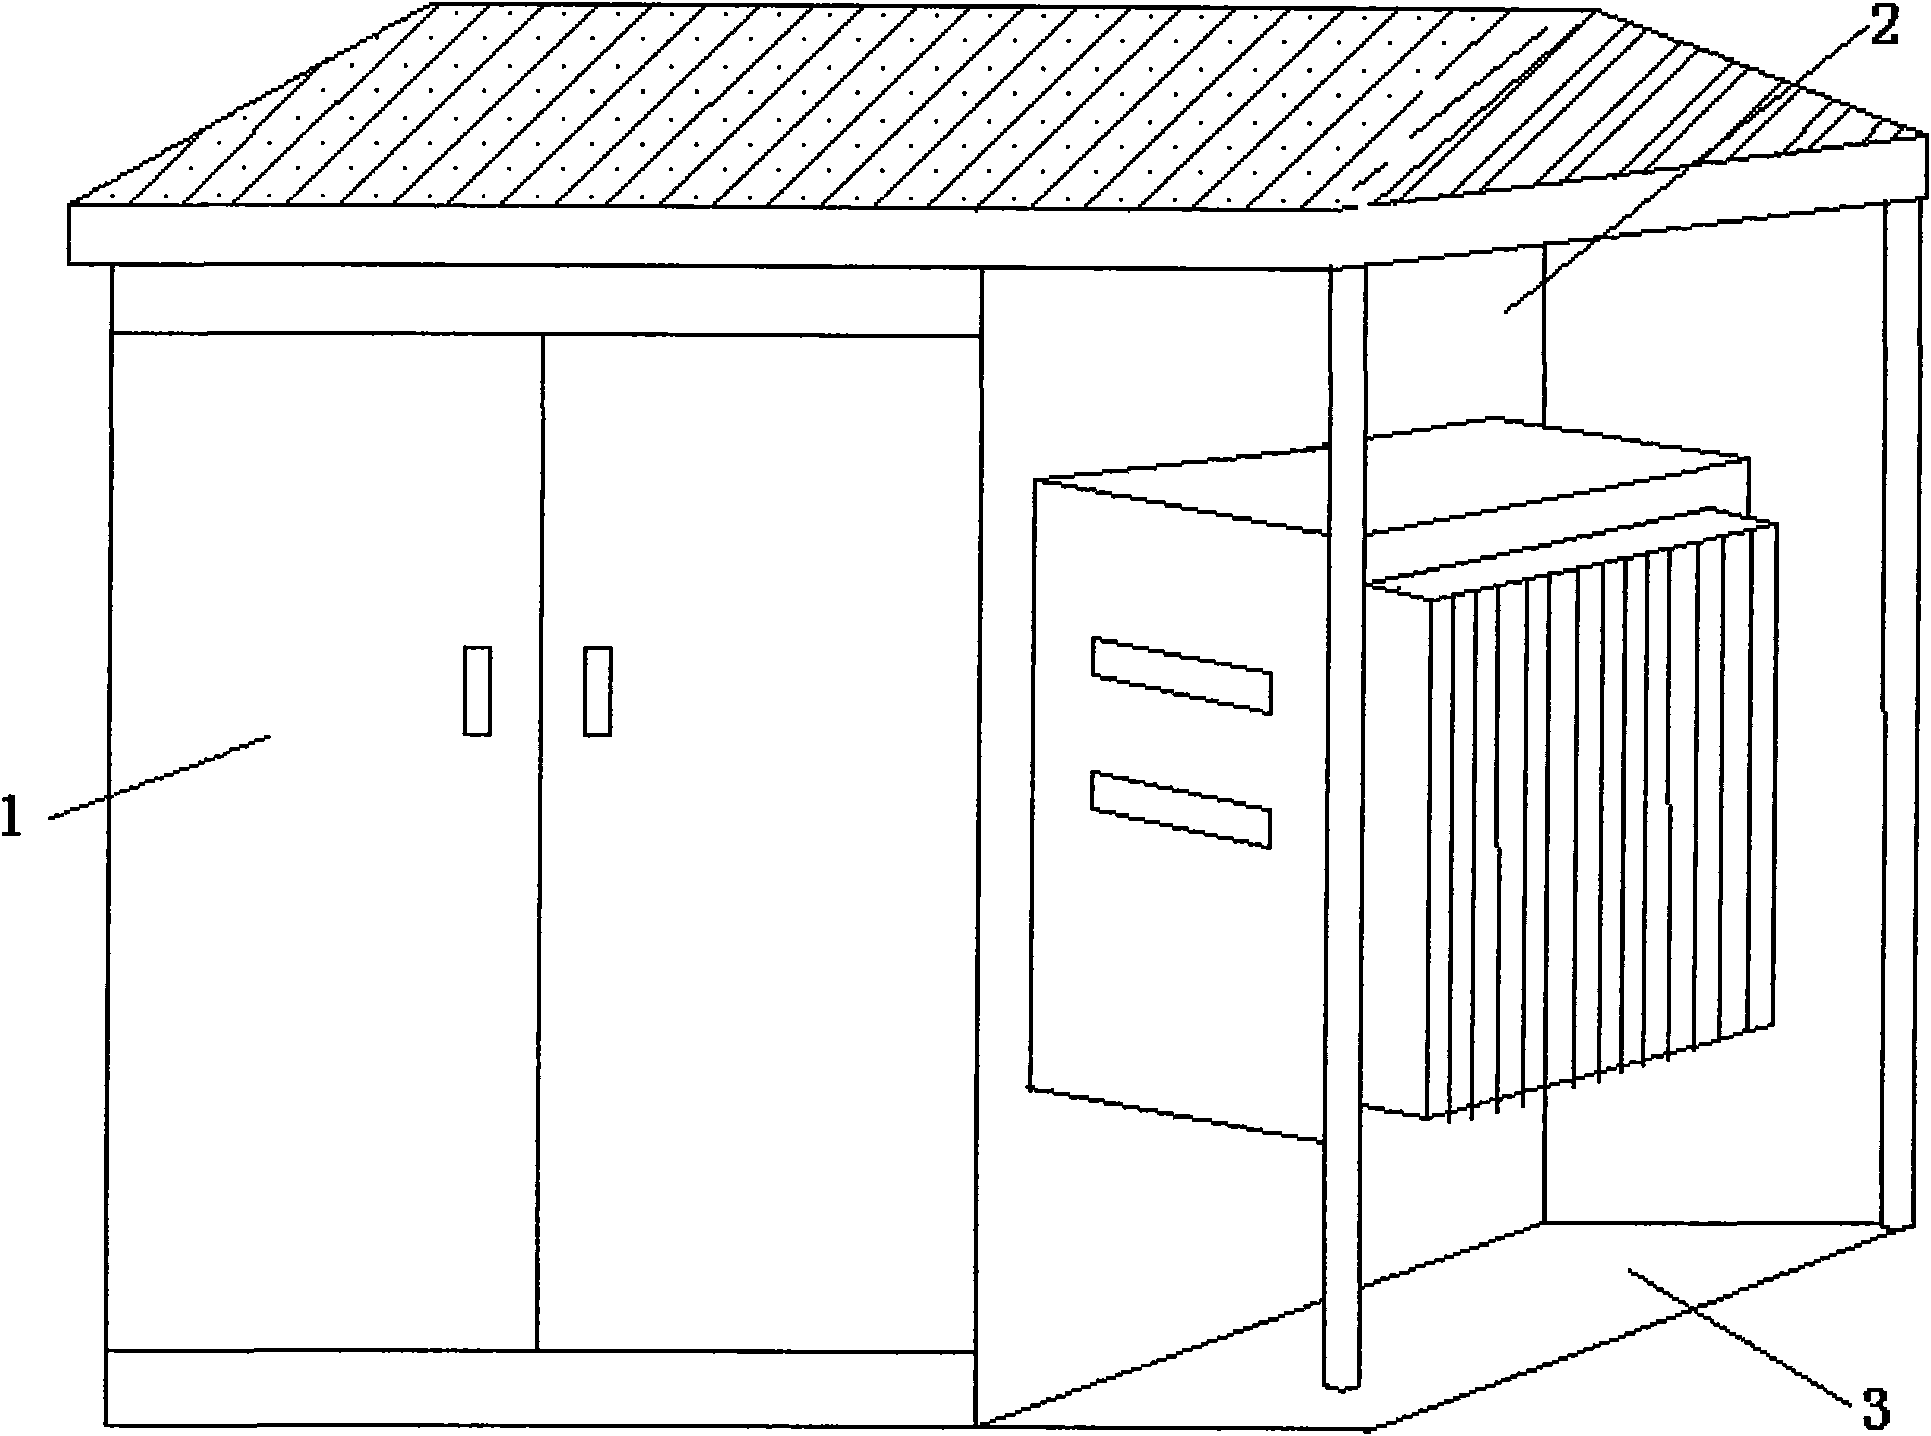 Box-type transformer substation